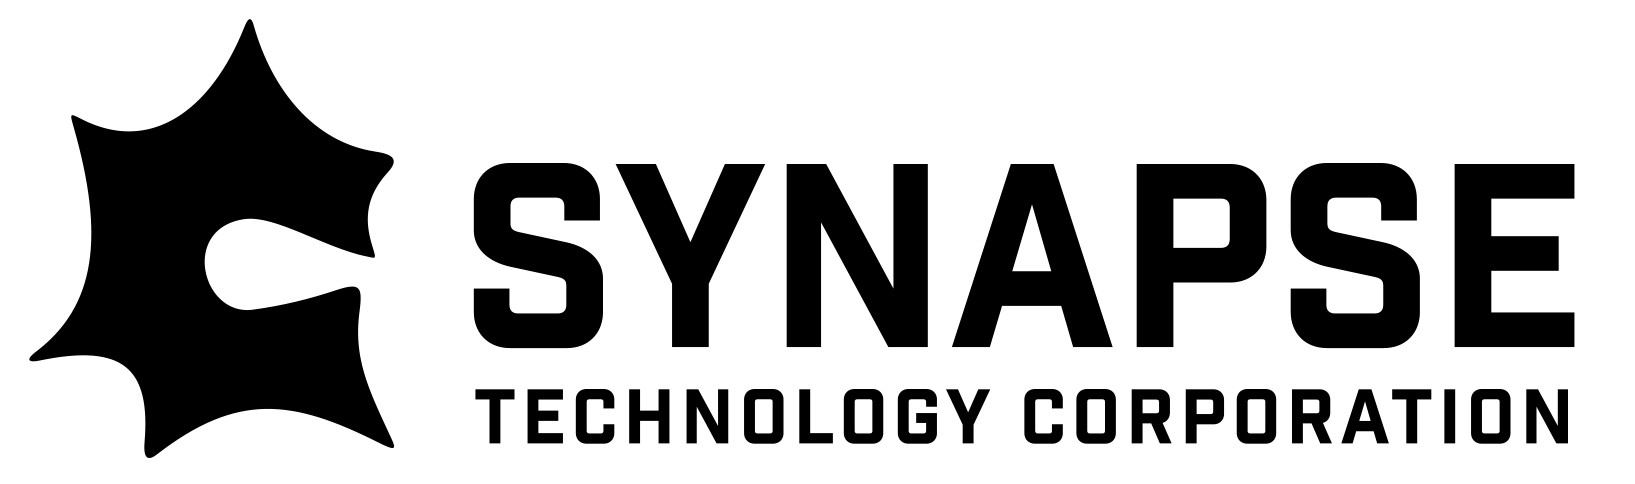 Synapse Technology Corporation Logo